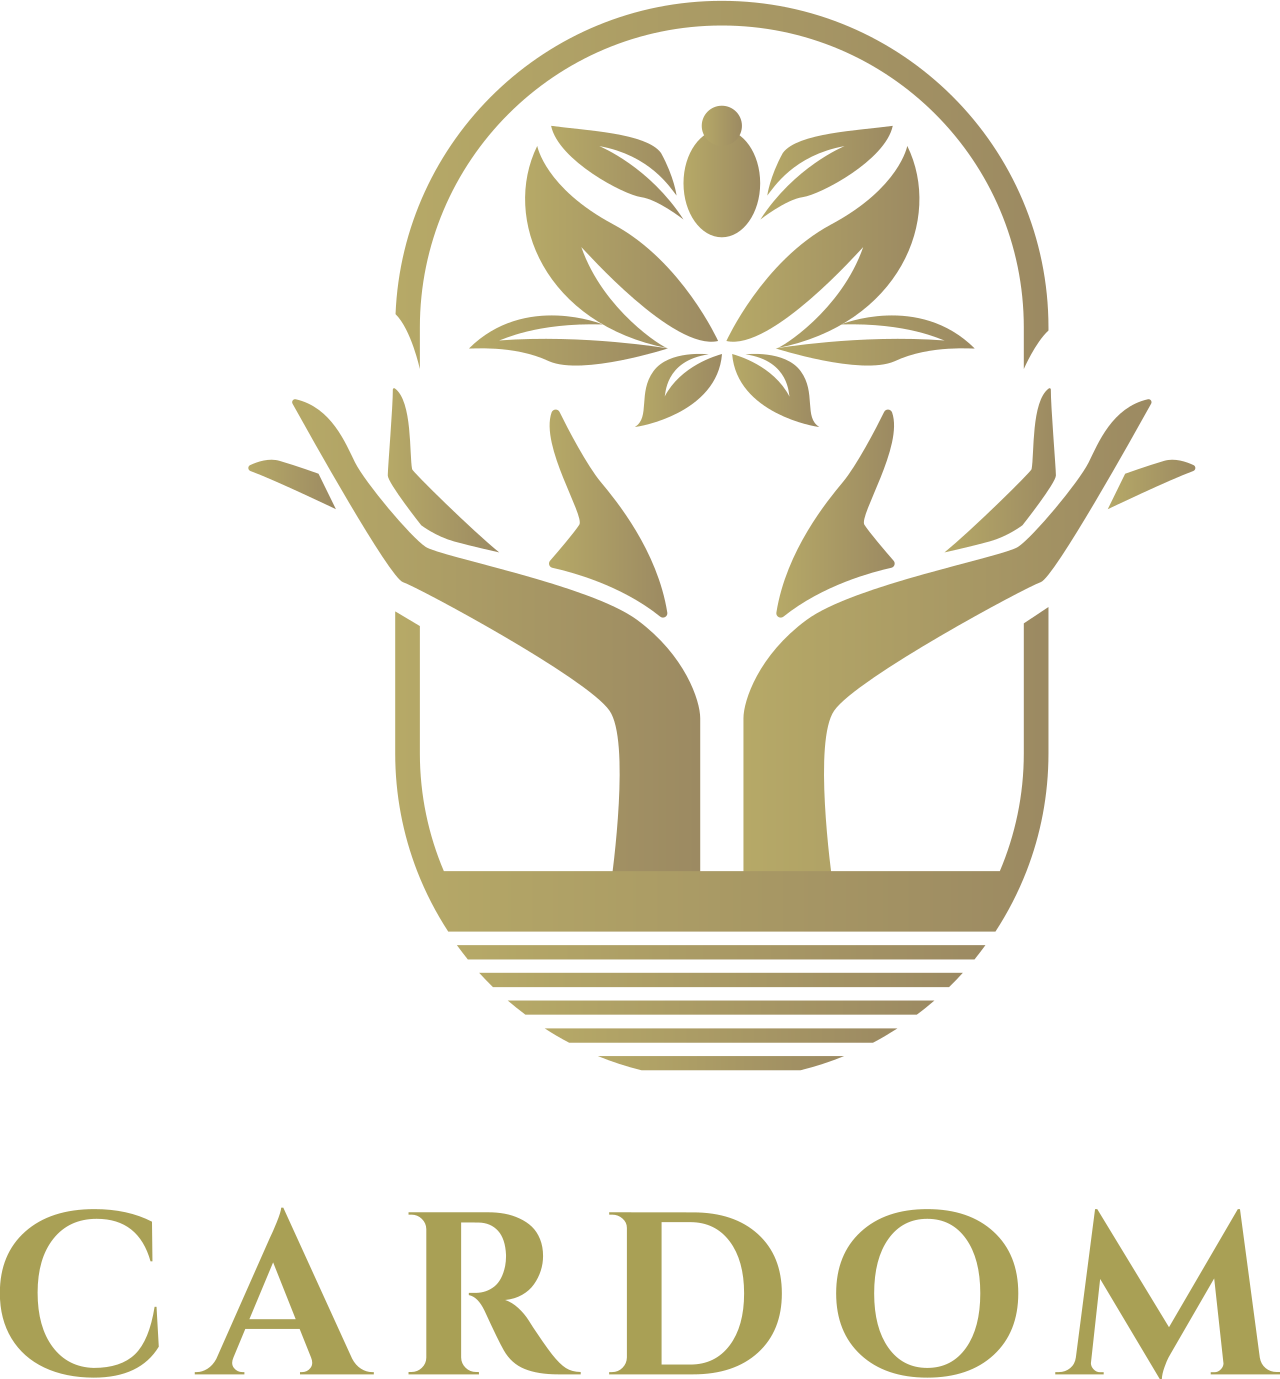 Cardome's web page